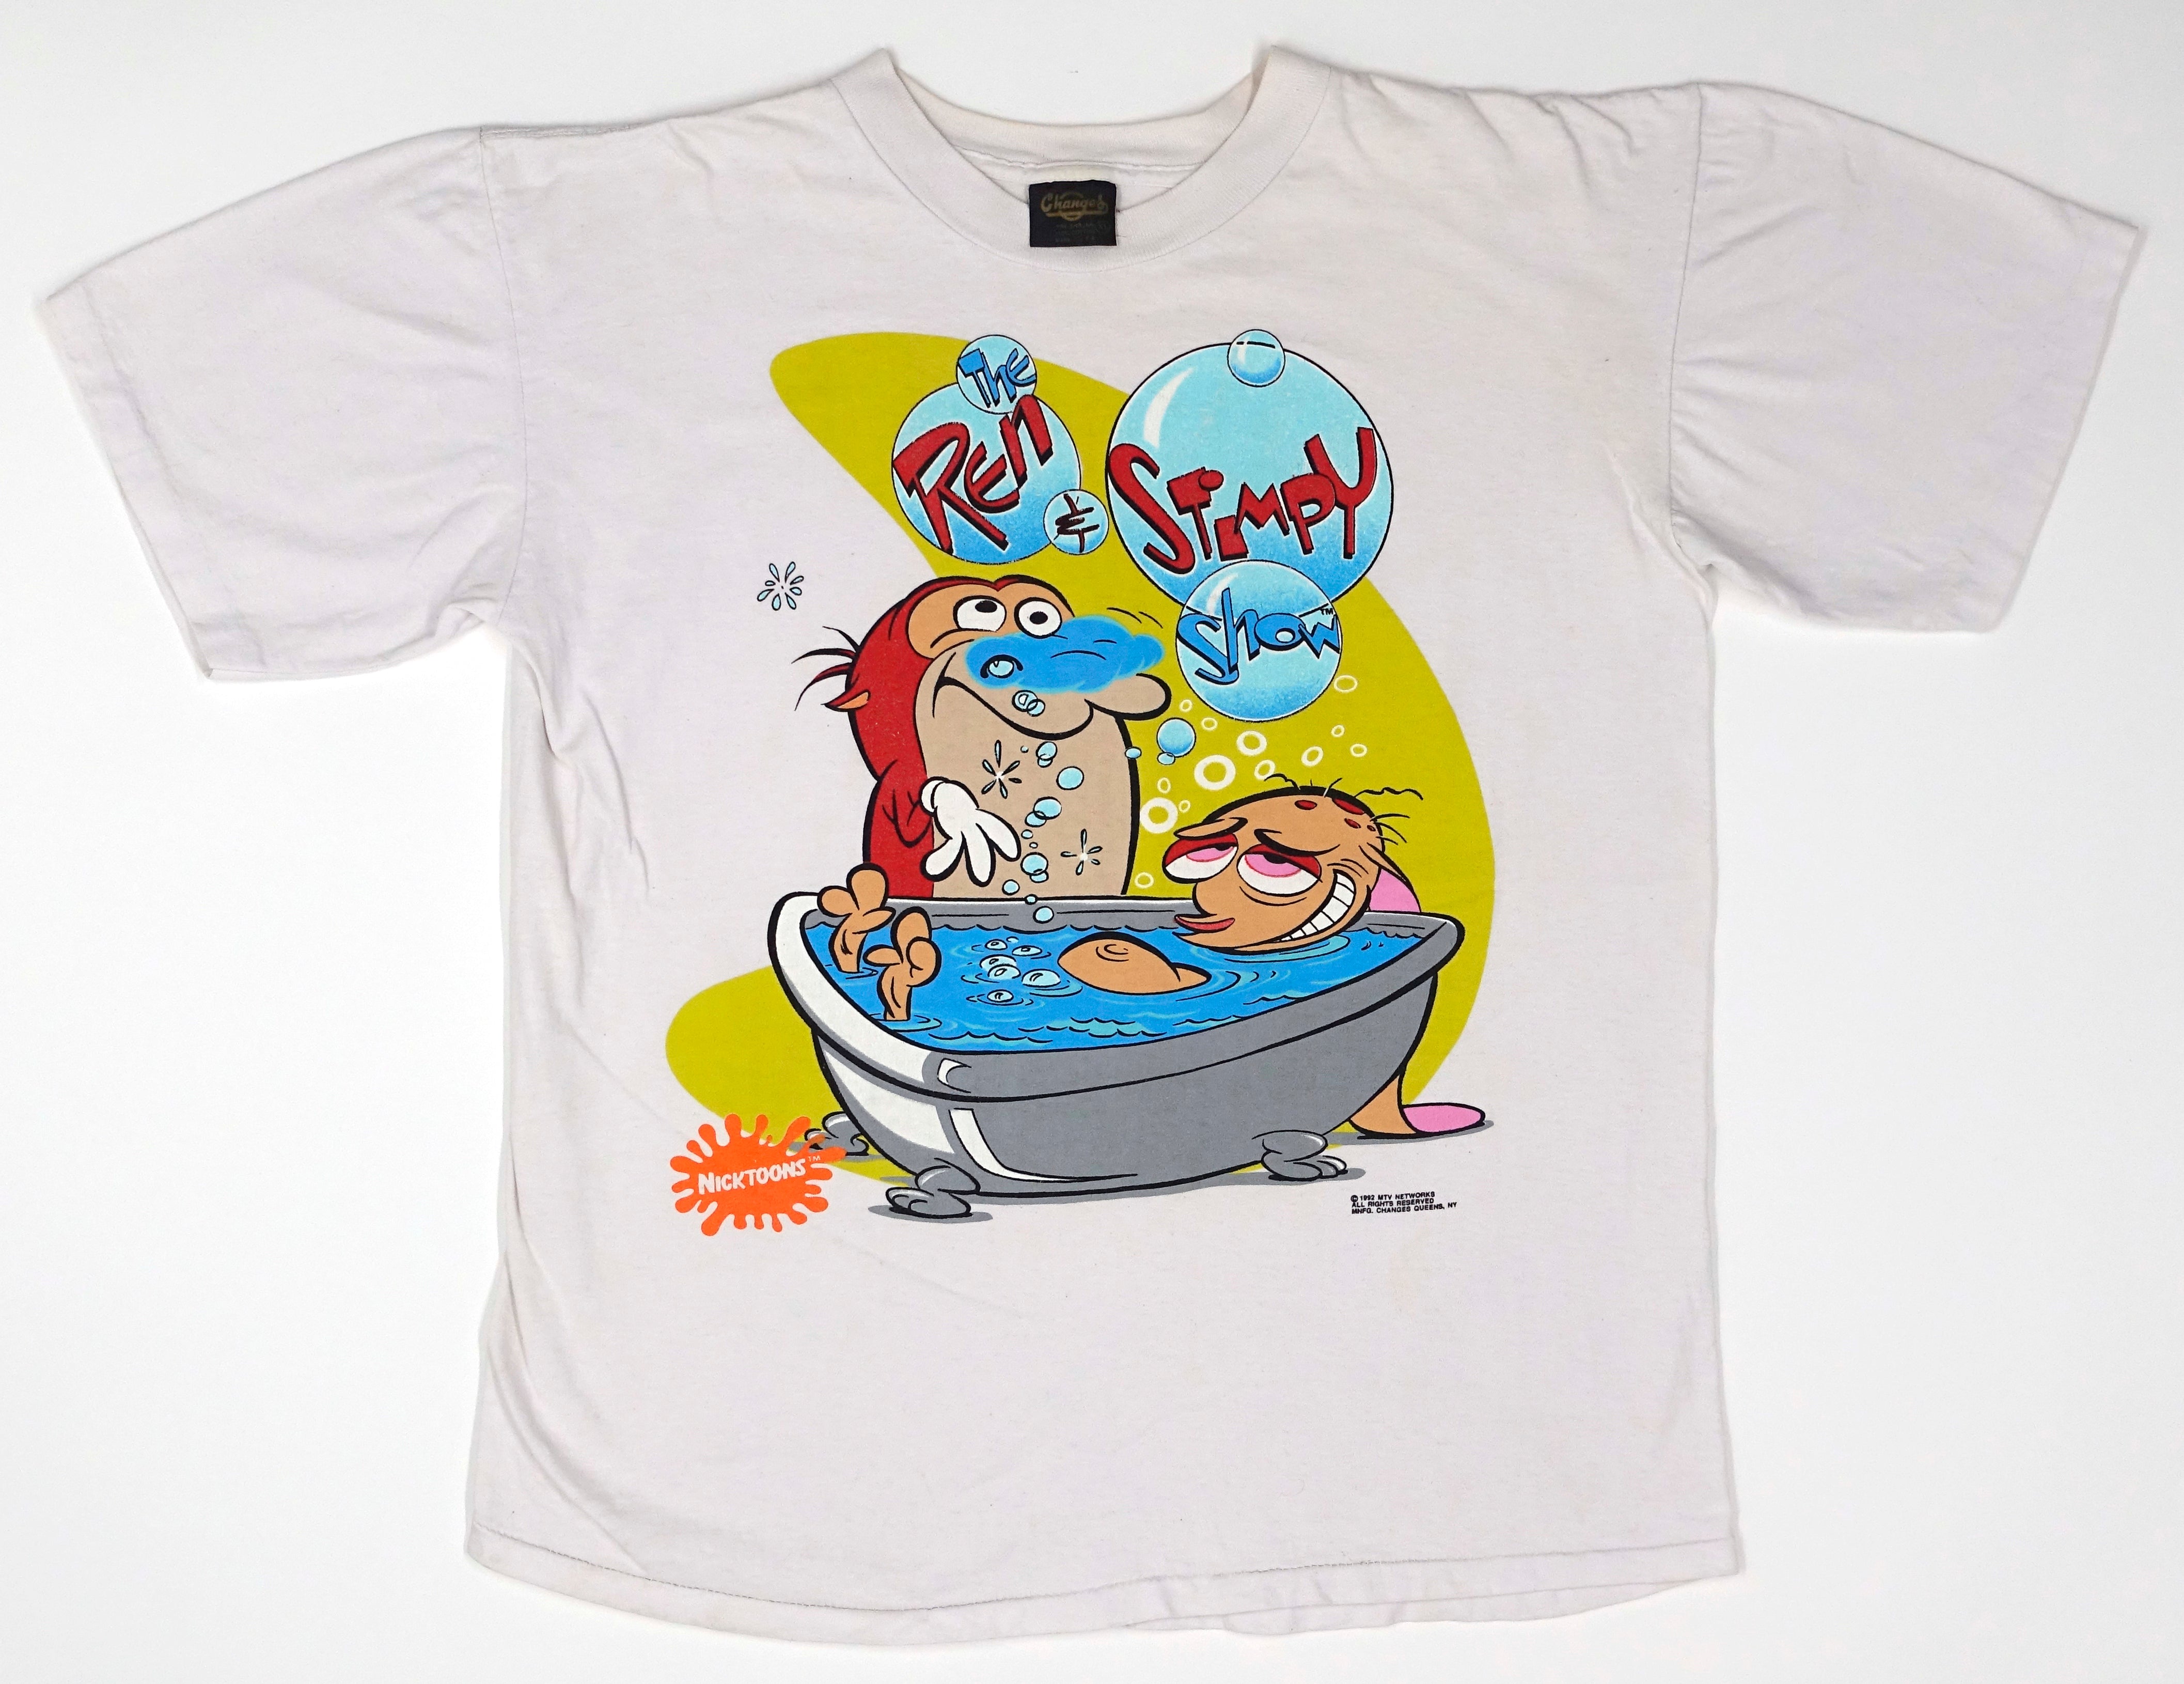 Ren & Stimpy - ©1992 Bathtub Graphic MTV Shirt Size XL